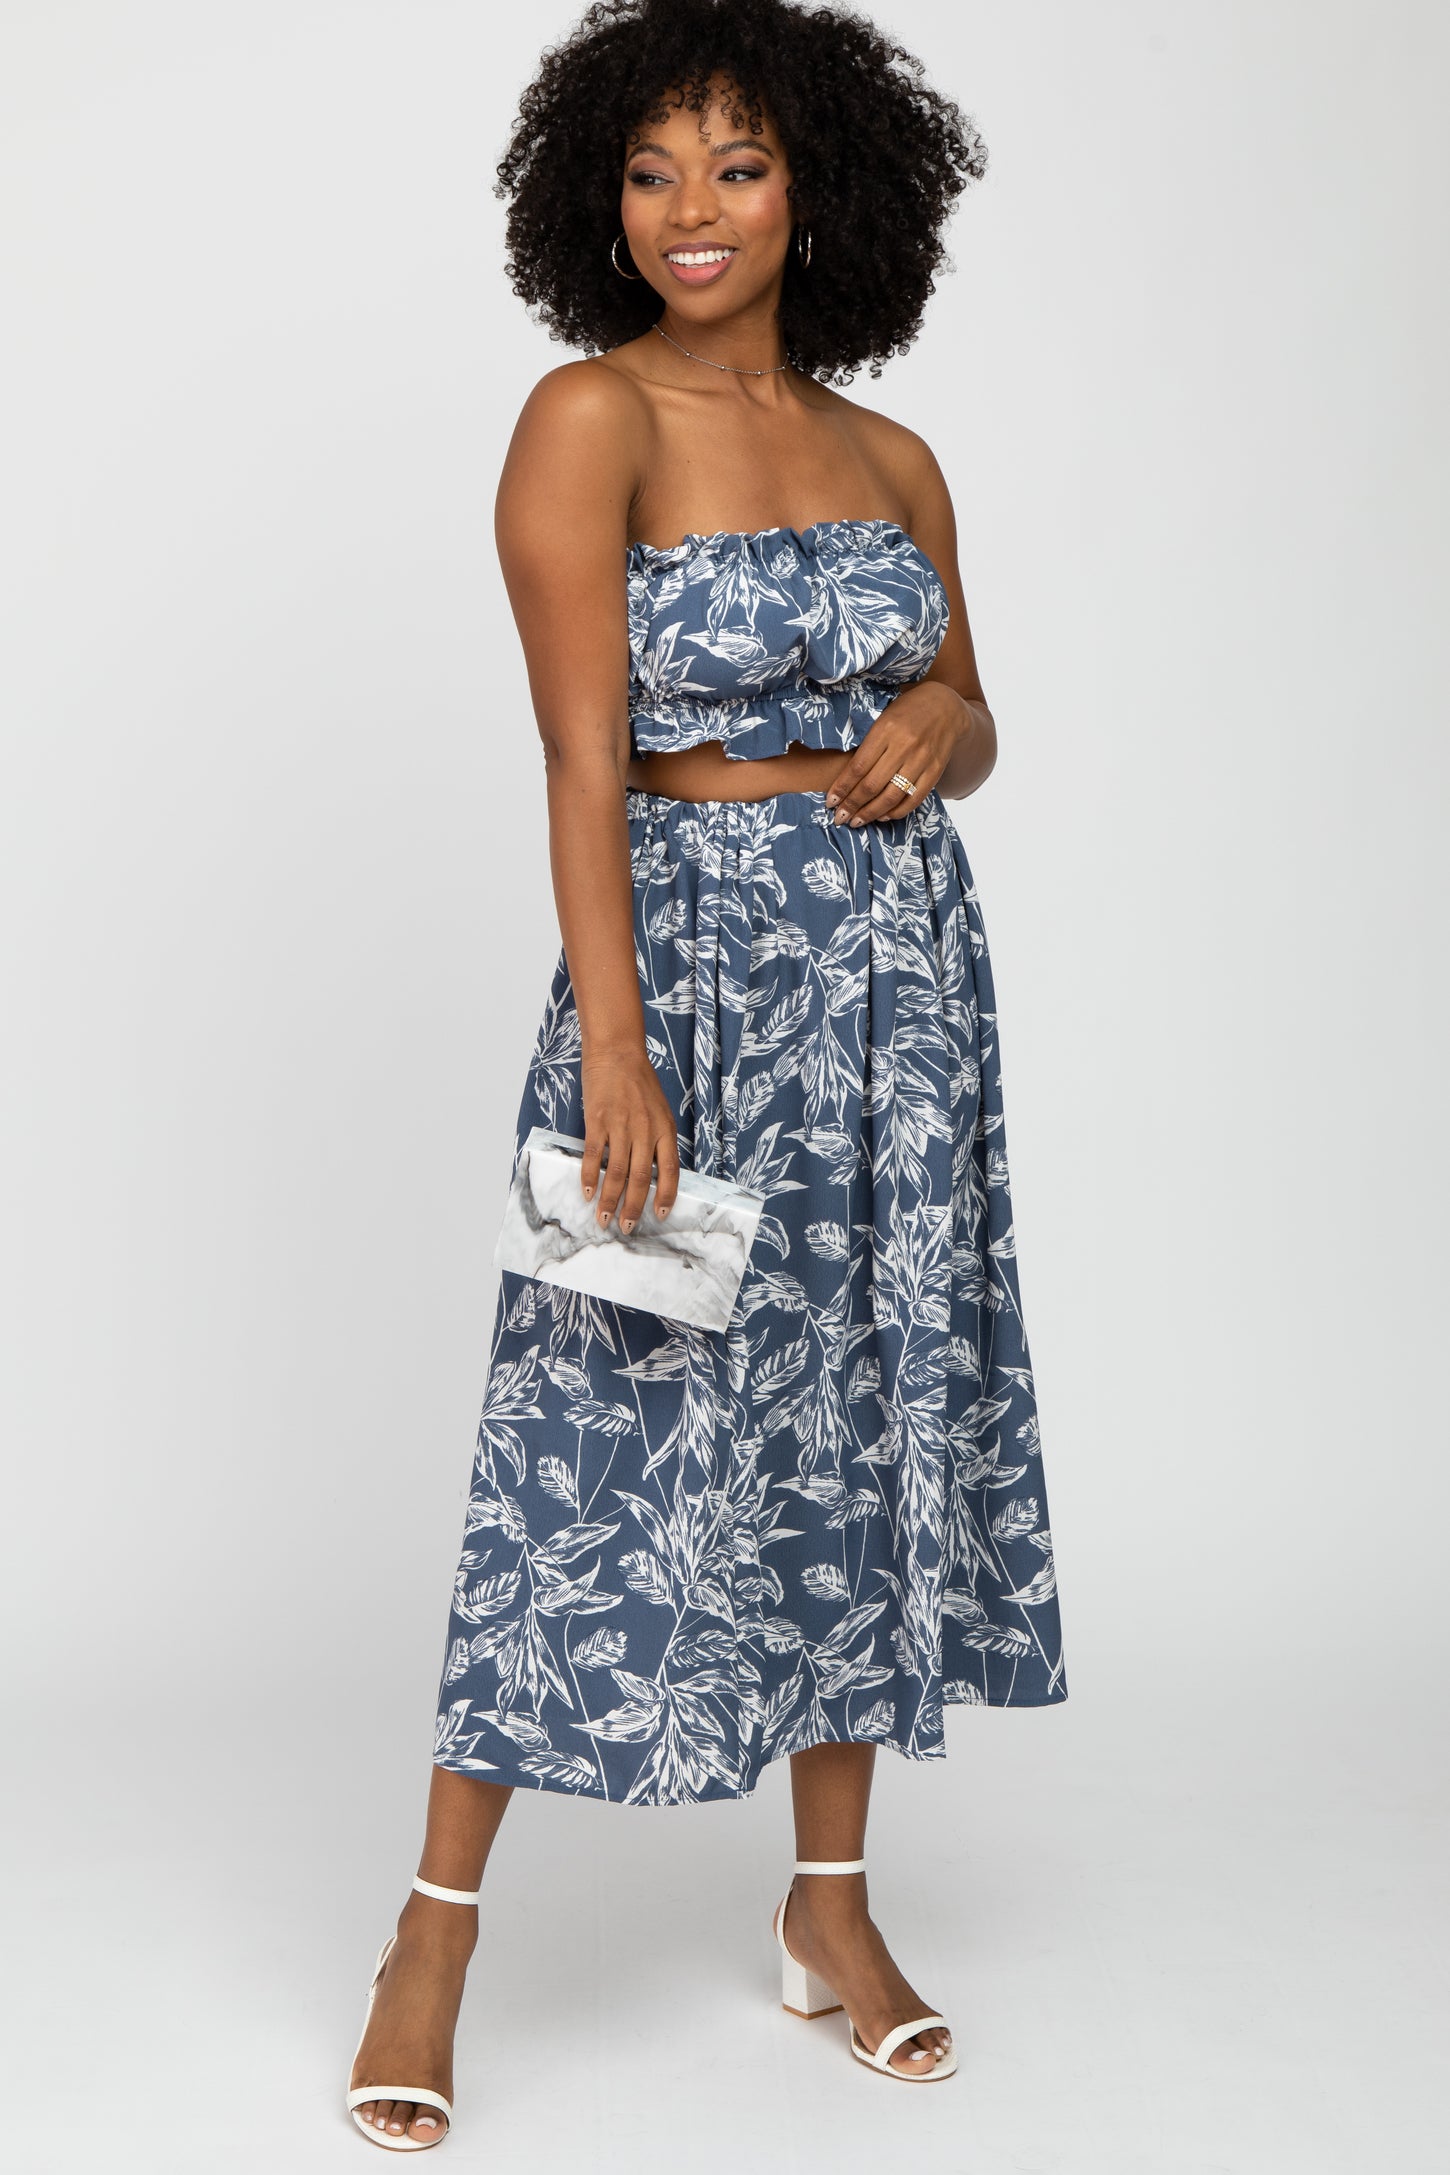 Blue Floral Print A-Line Skirt Set